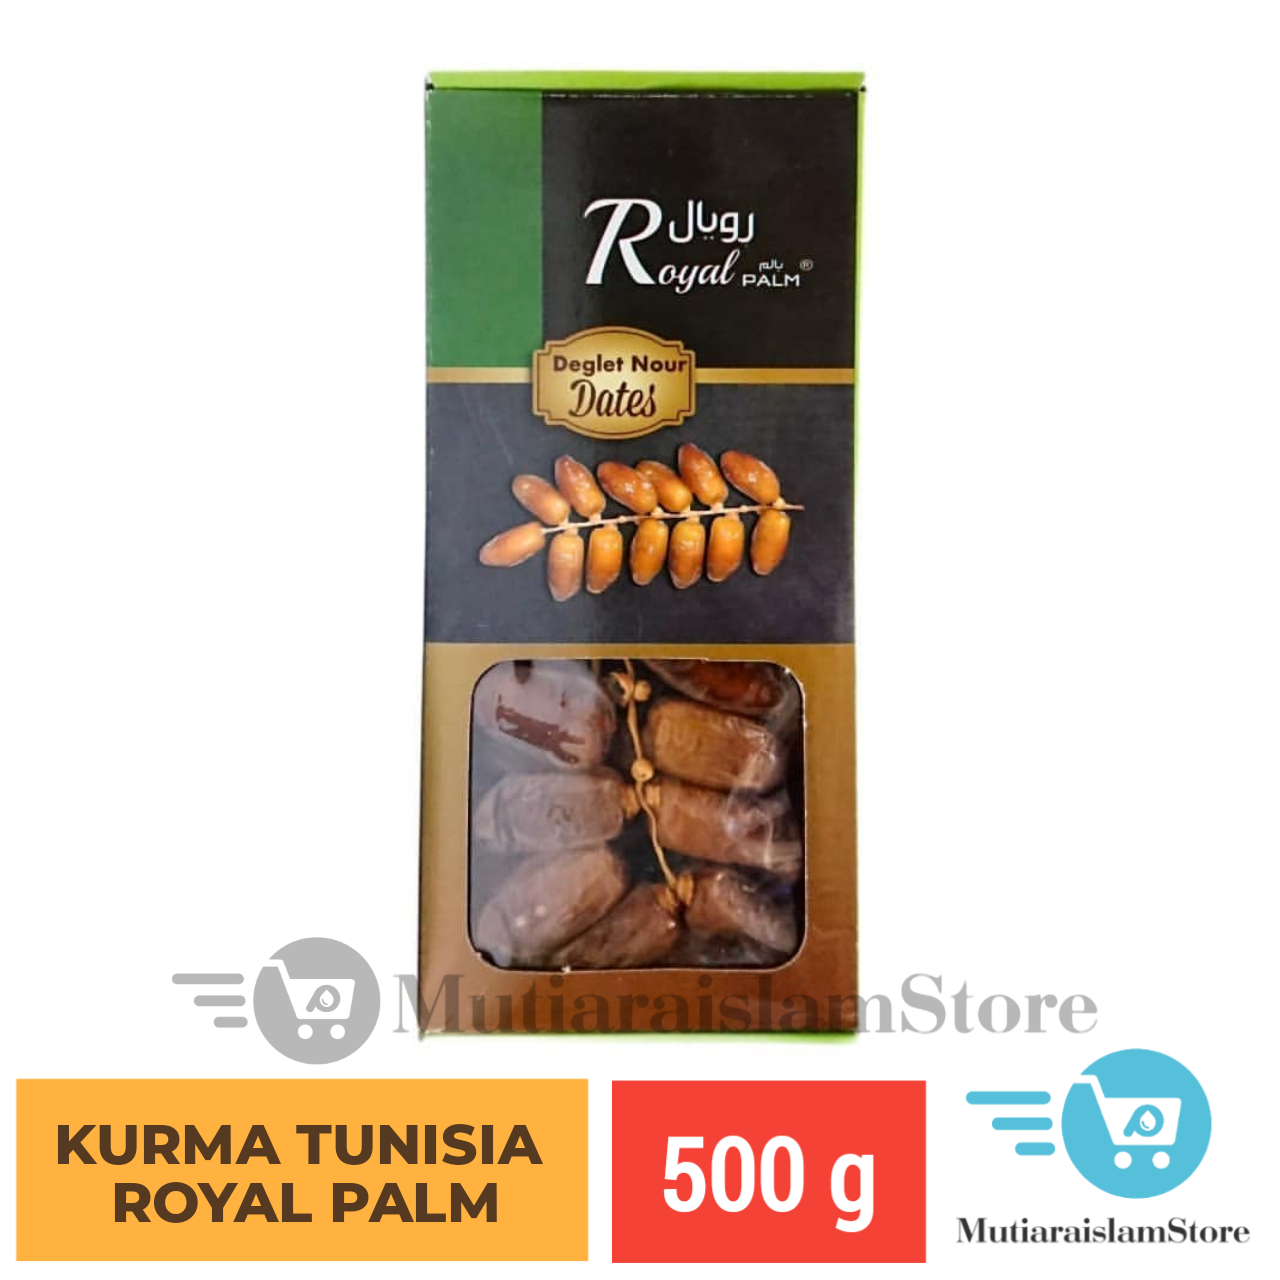 Kurma Tunisia Deglet Nour Royal Palm 500 gram